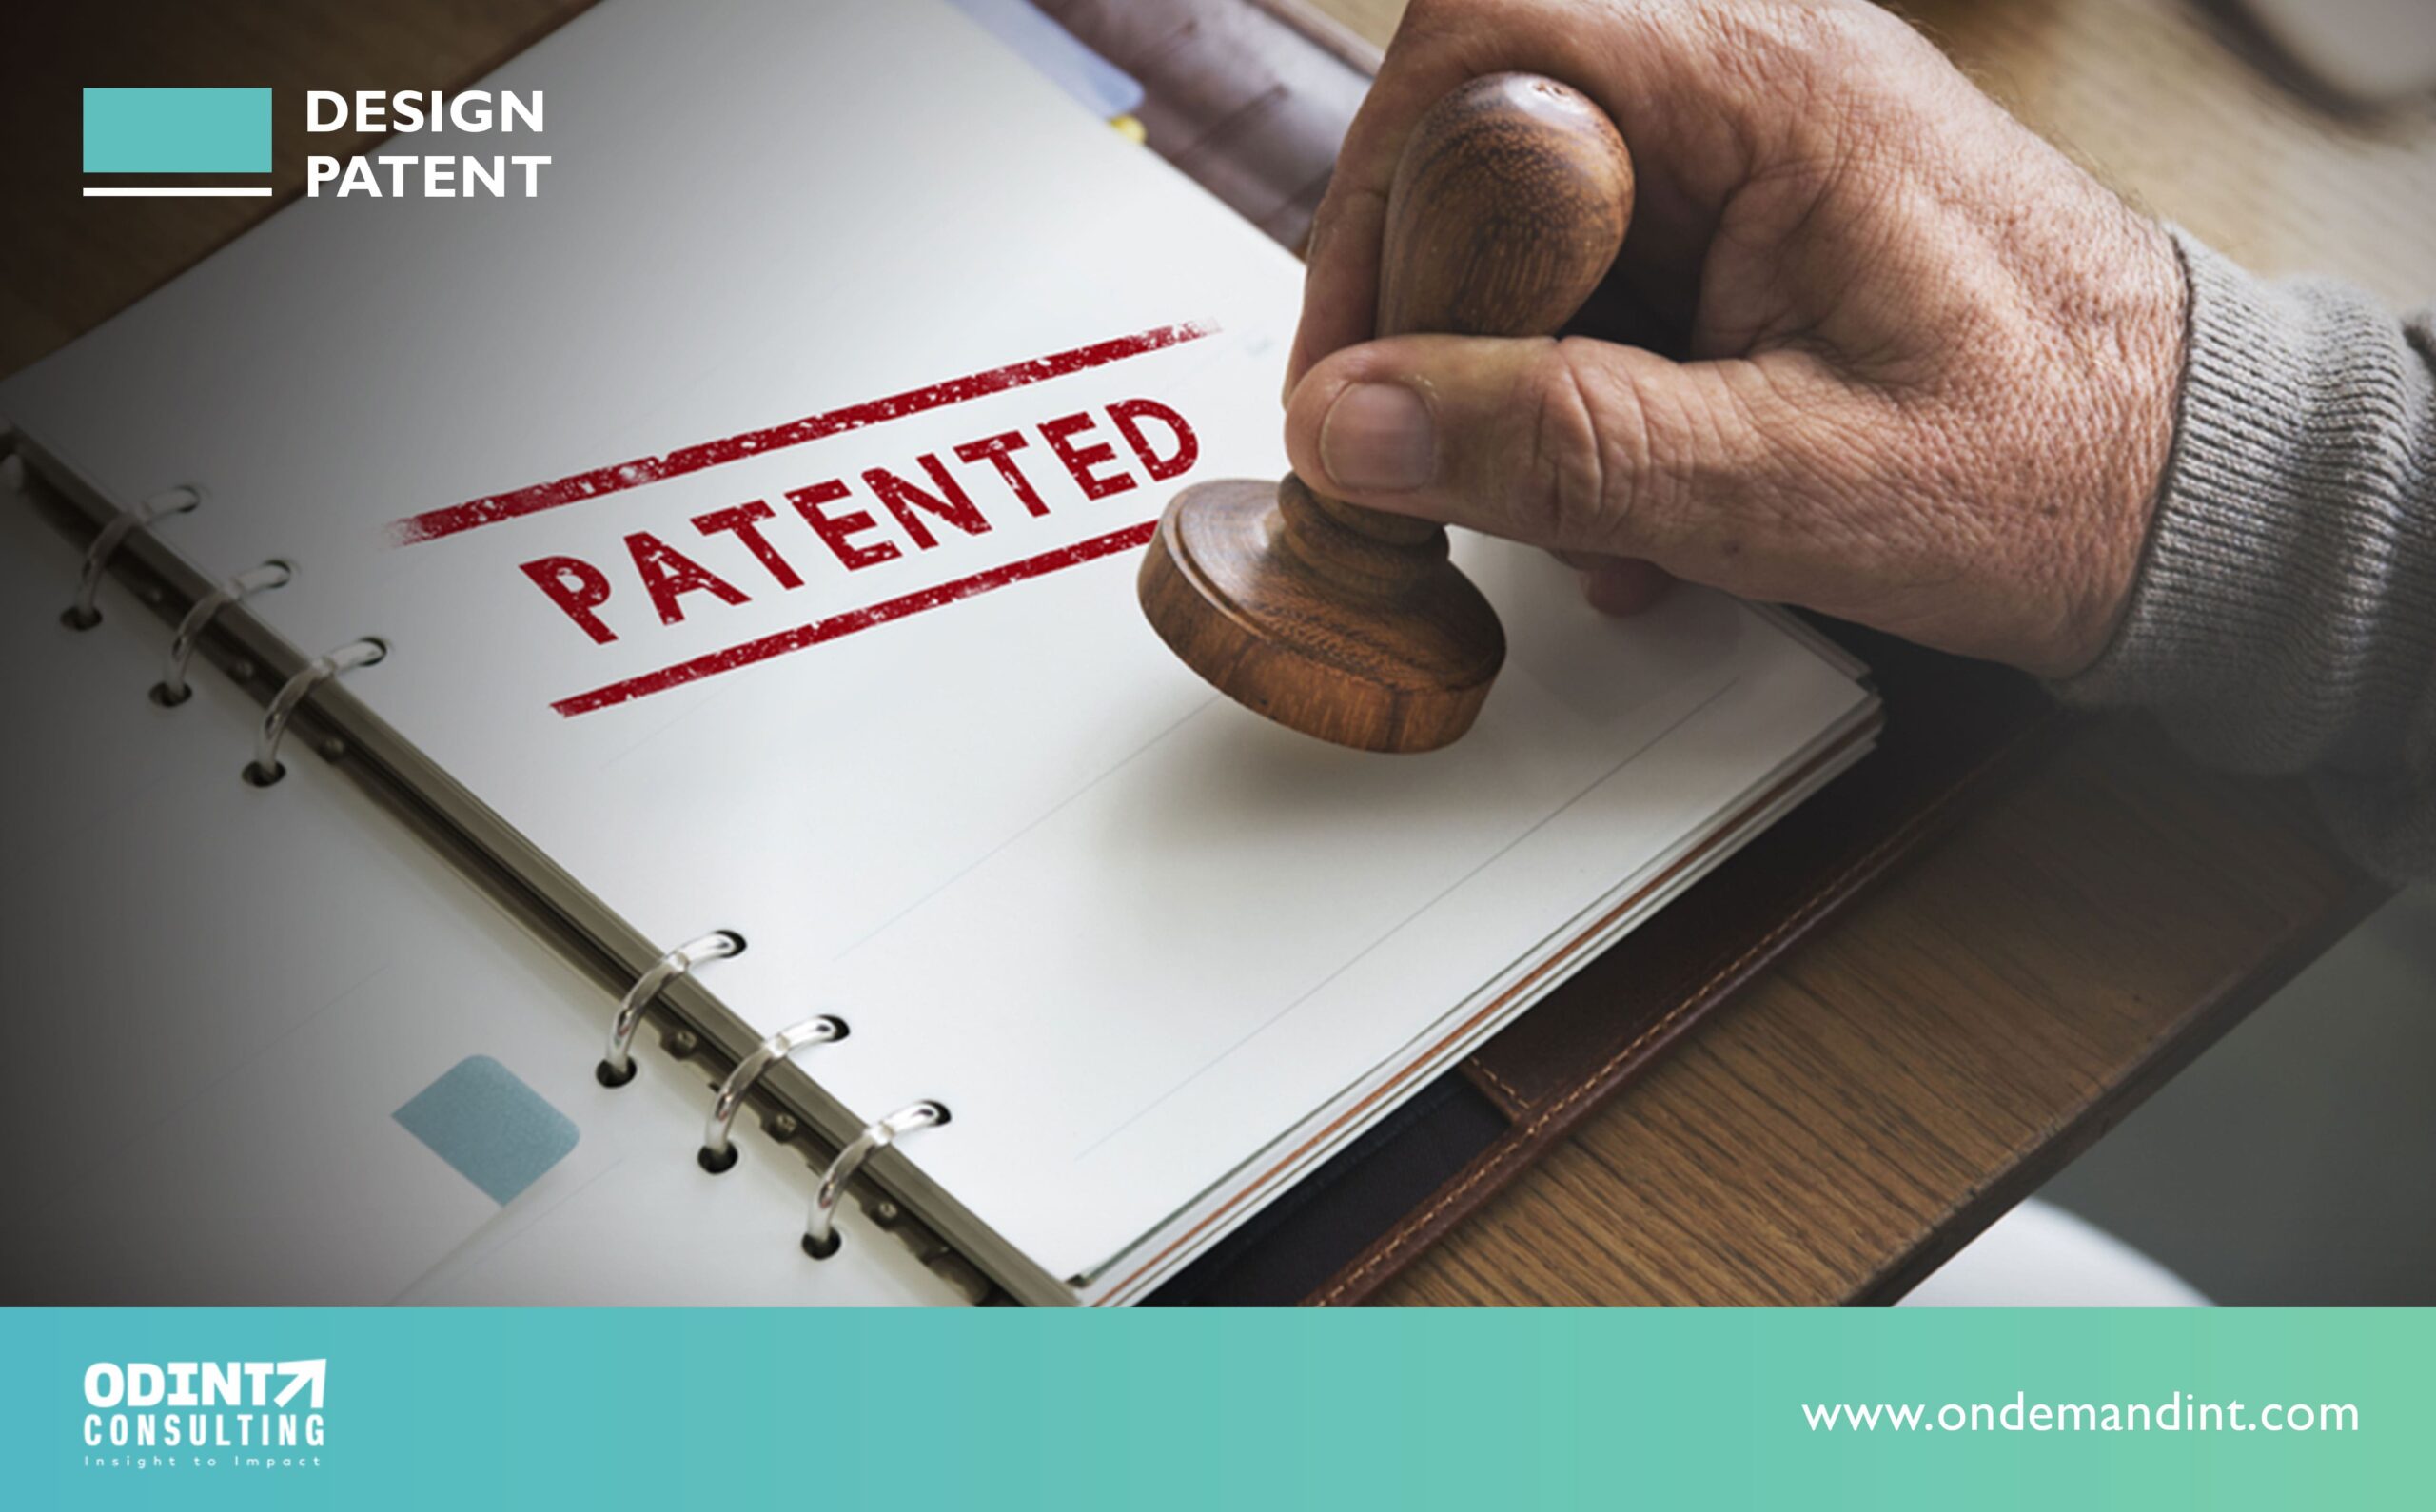 File a Design Patent in 8 Steps: Importance, Advantages, Drawbacks, & Procedure